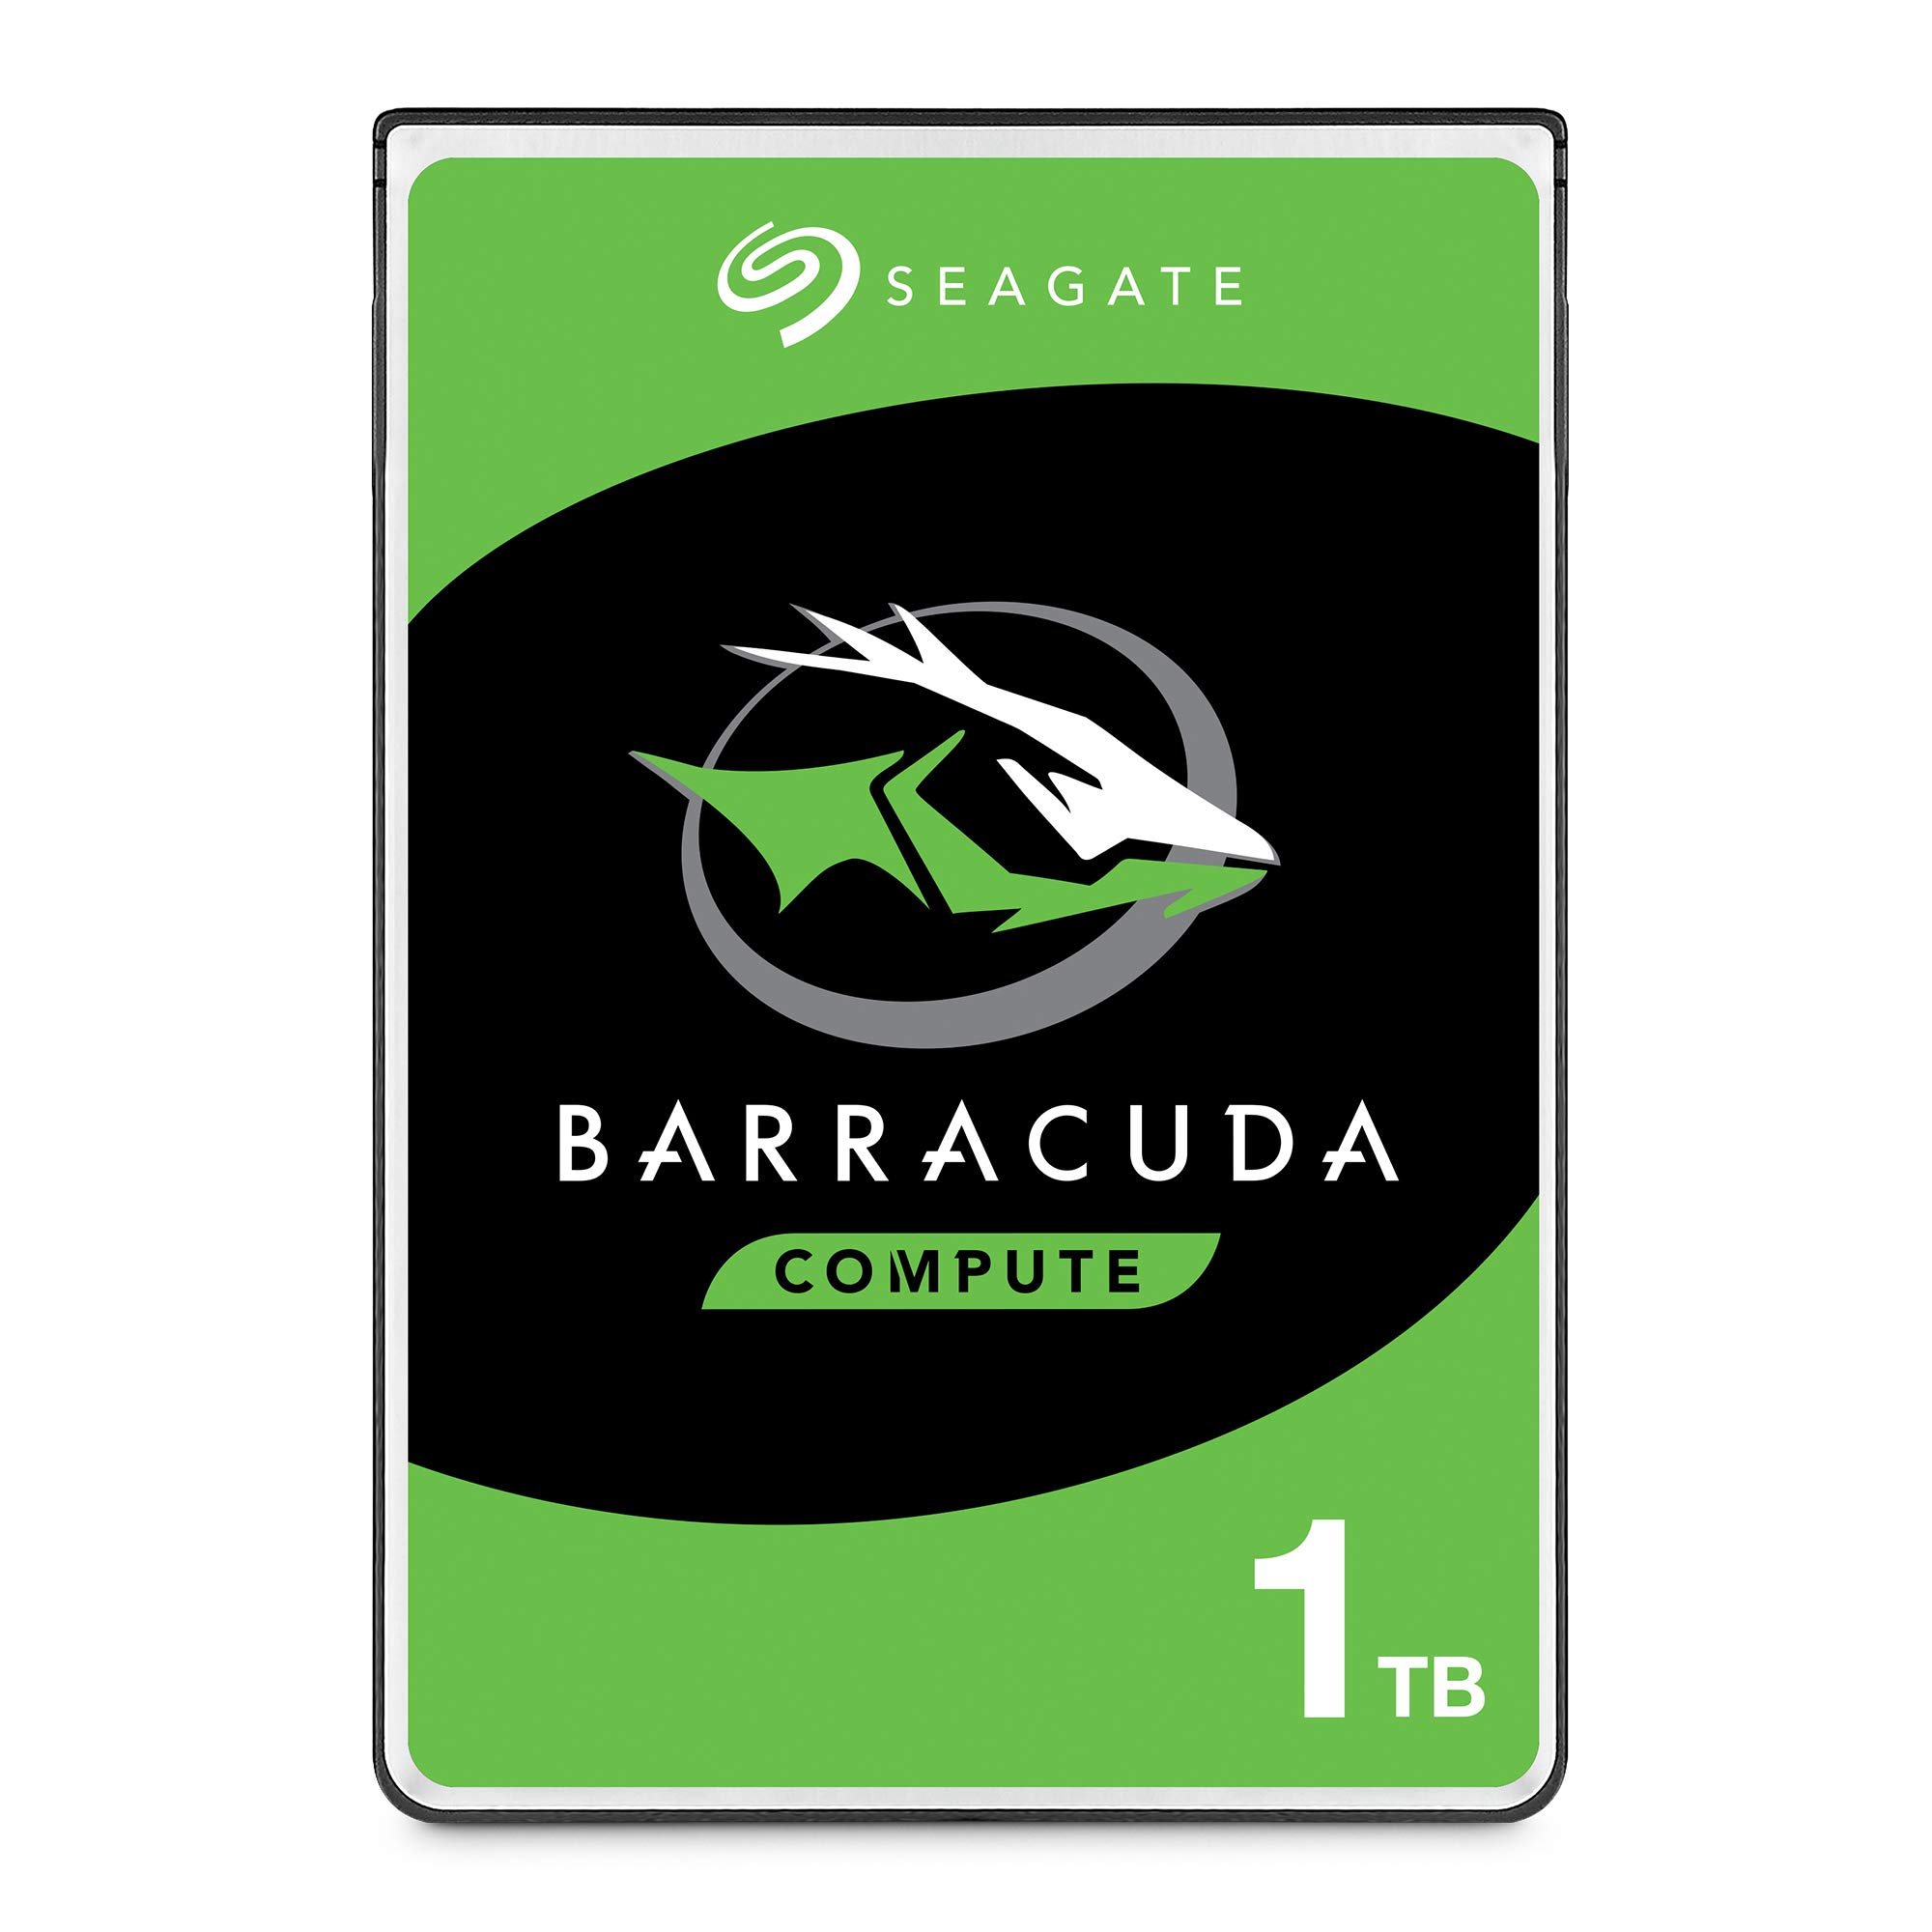 Seagate BarraCuda 1TB Internal Hard Drive HDD – 2.5 Inch SATA 6 Gb/s 5400 RPM 128MB Cache for PC Laptop (ST1000LM048)